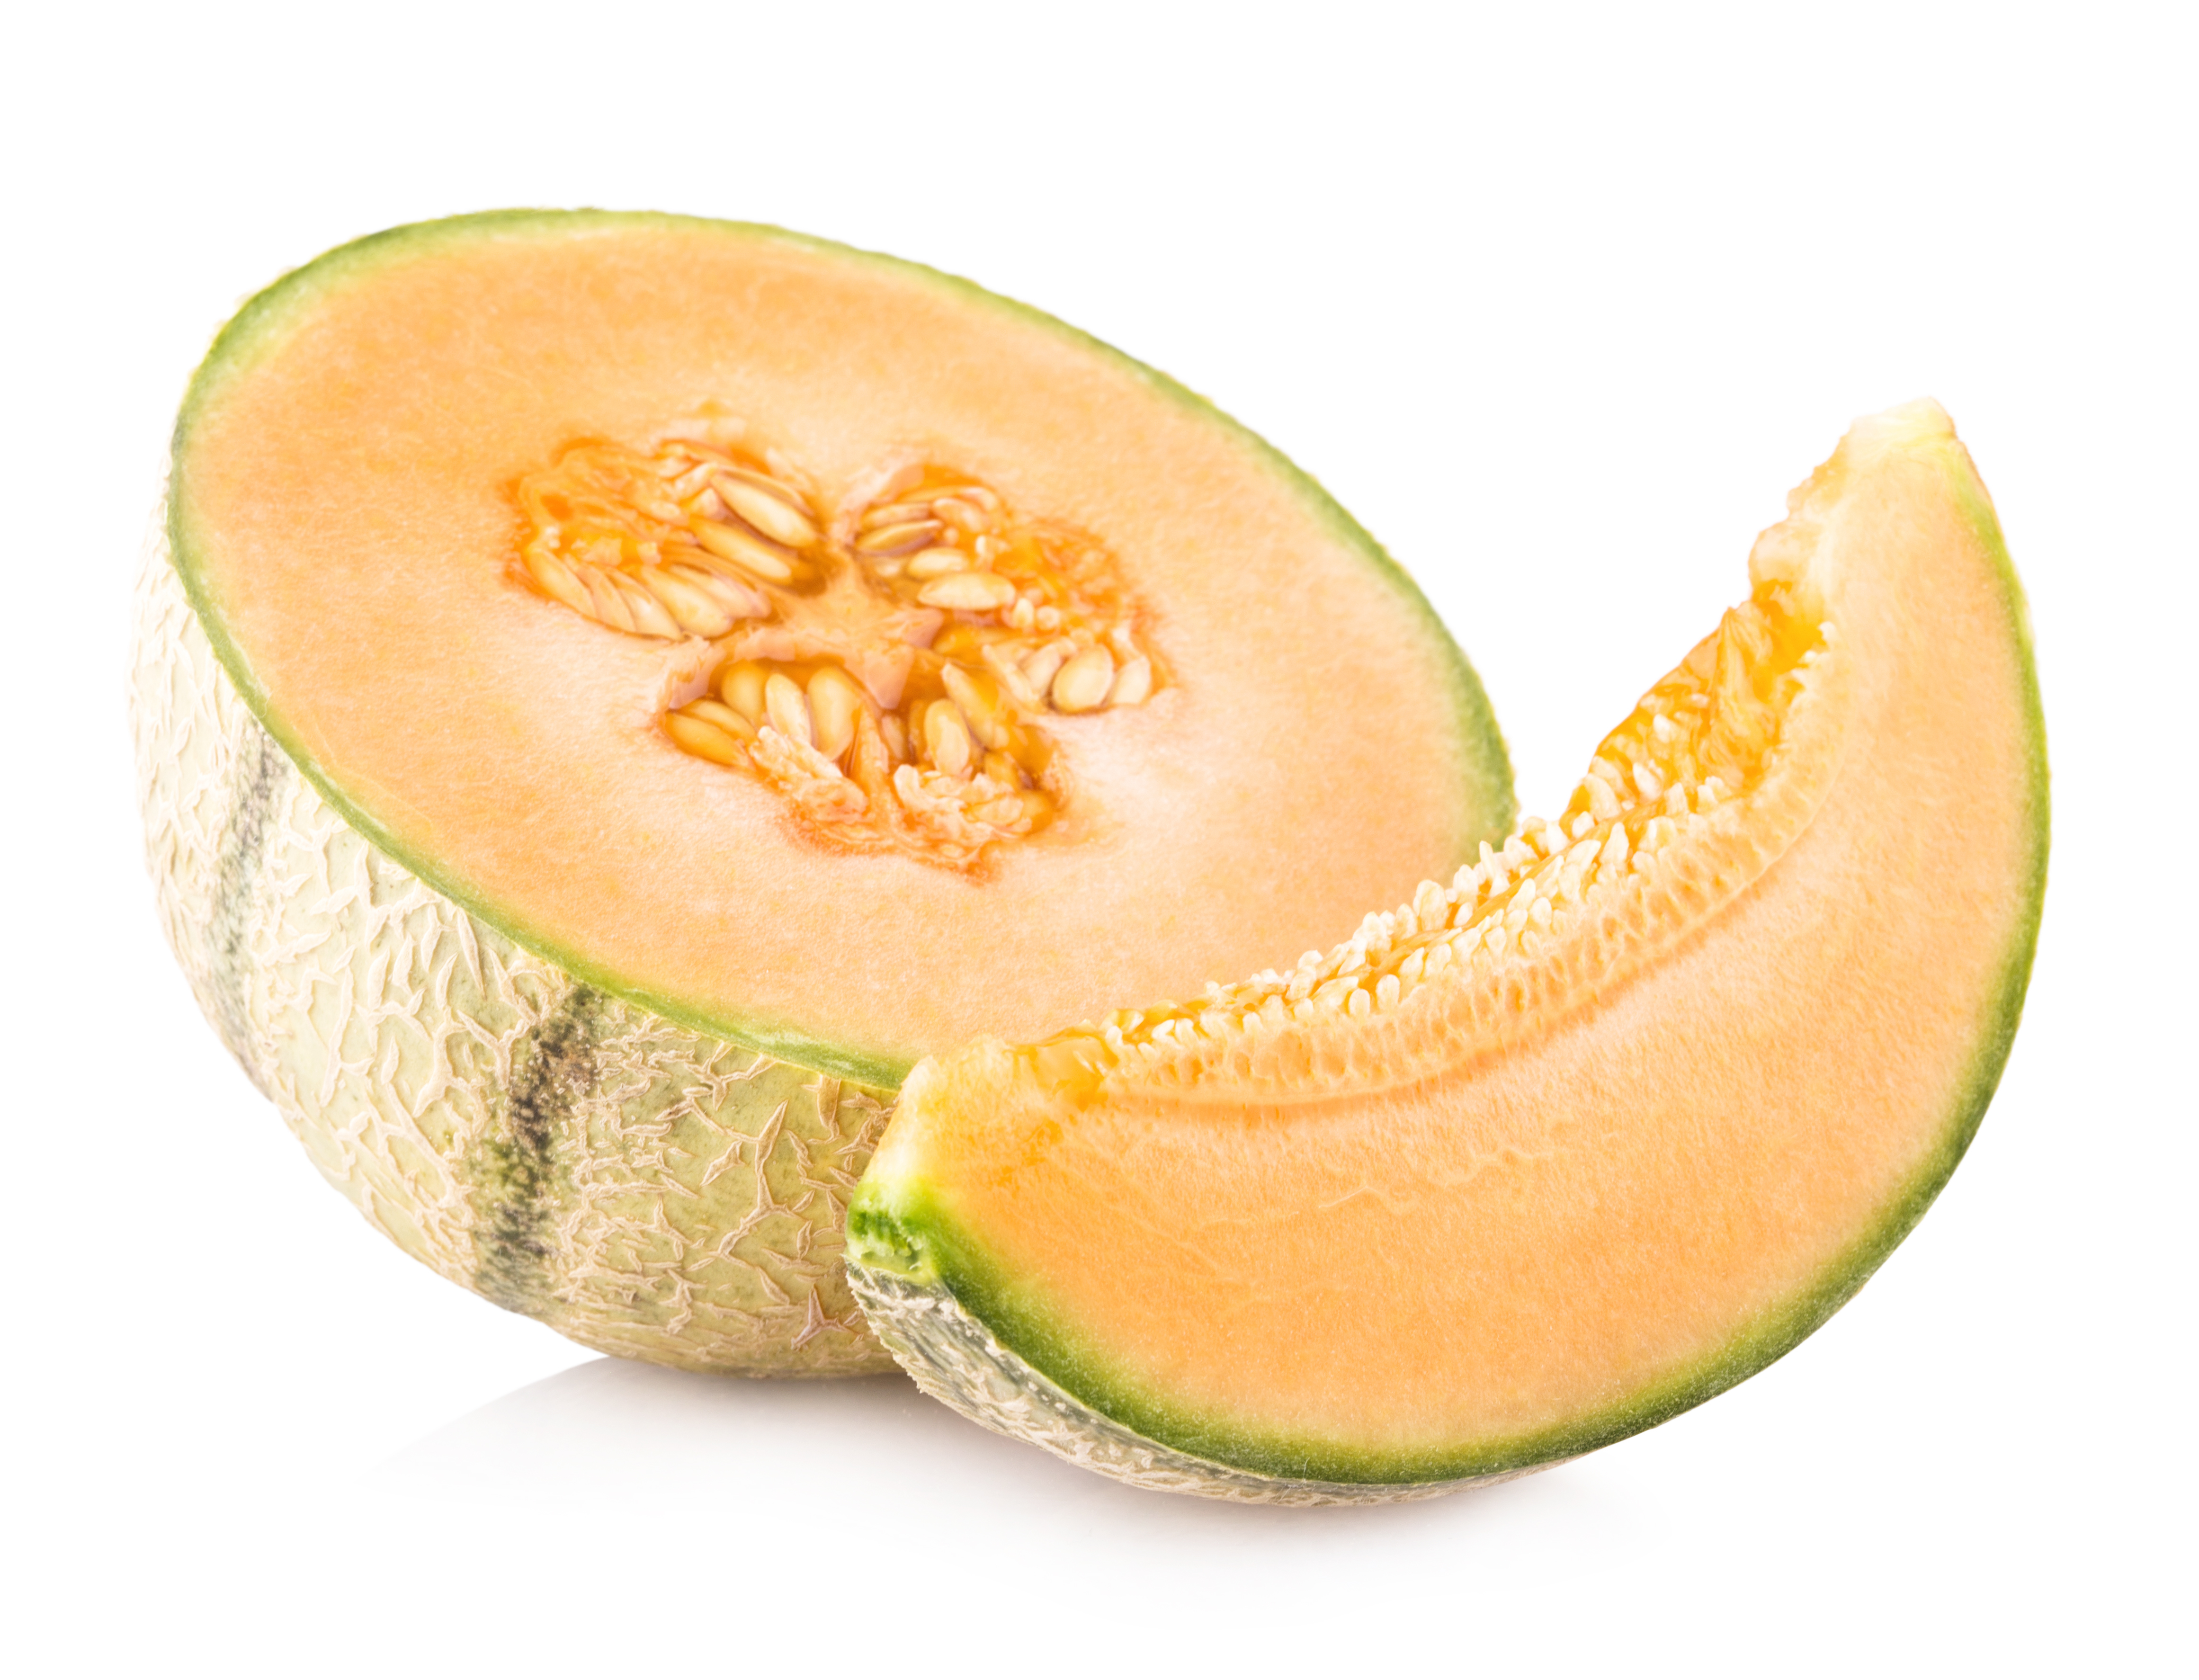 Fresh melon photos found on the web.